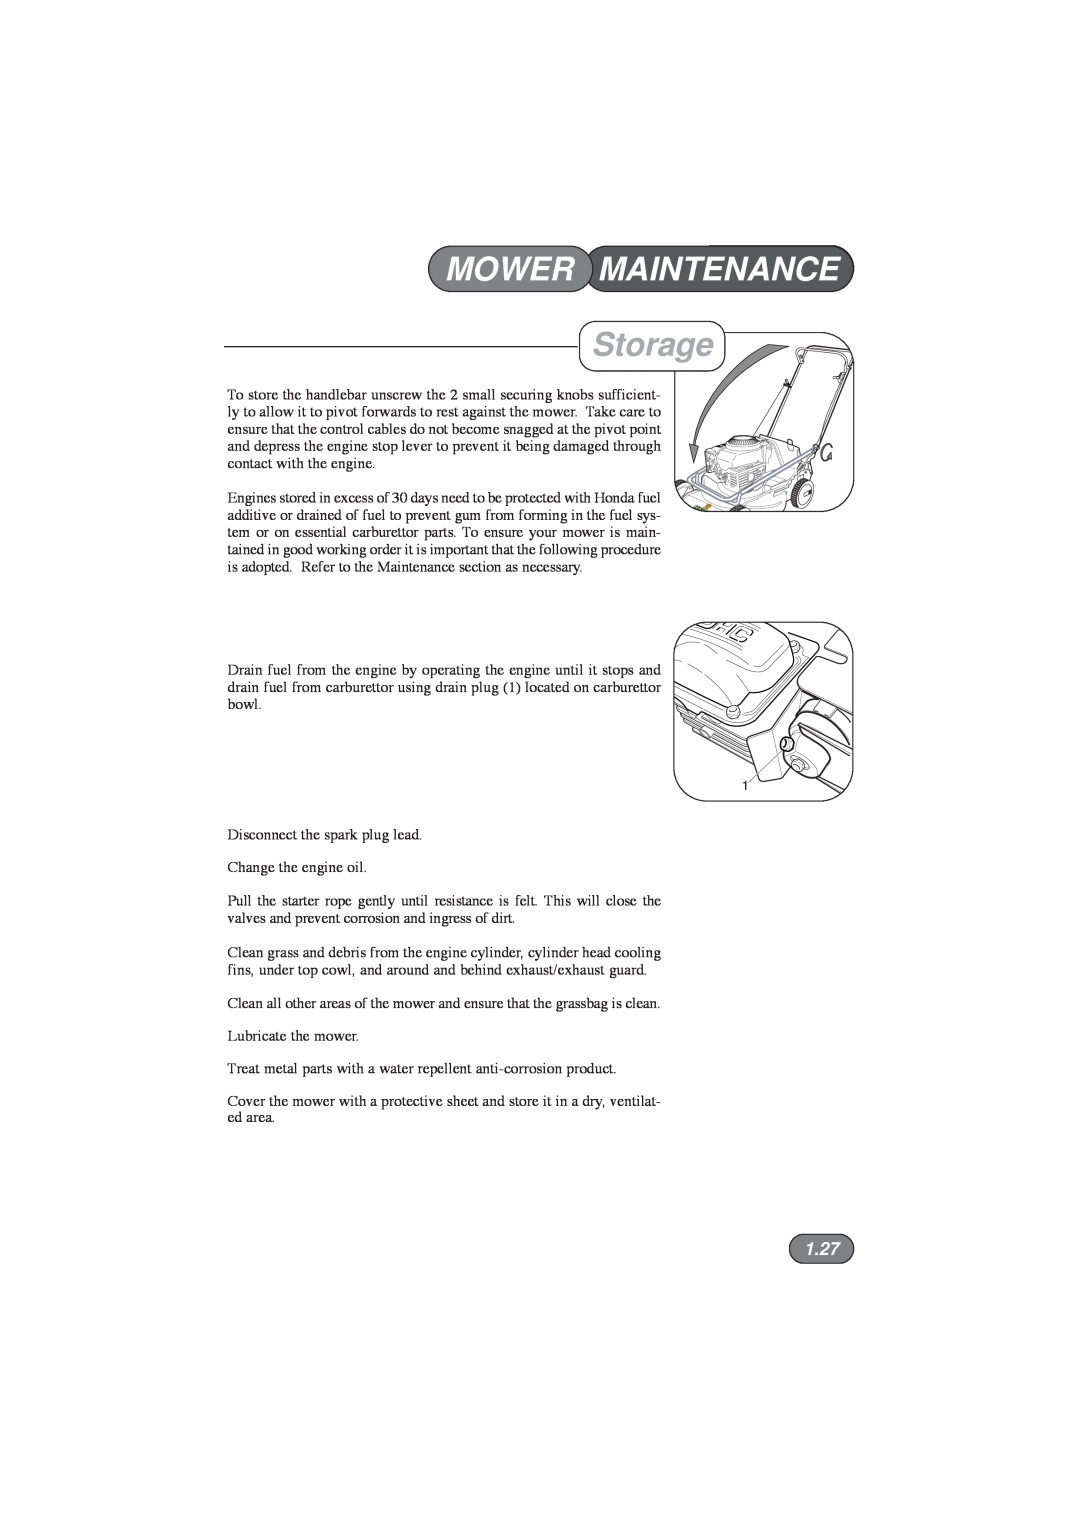 Hayter Mowers 432D, 435D, 434D, 433D manual Storage, 1.27, Mower Maintenance 